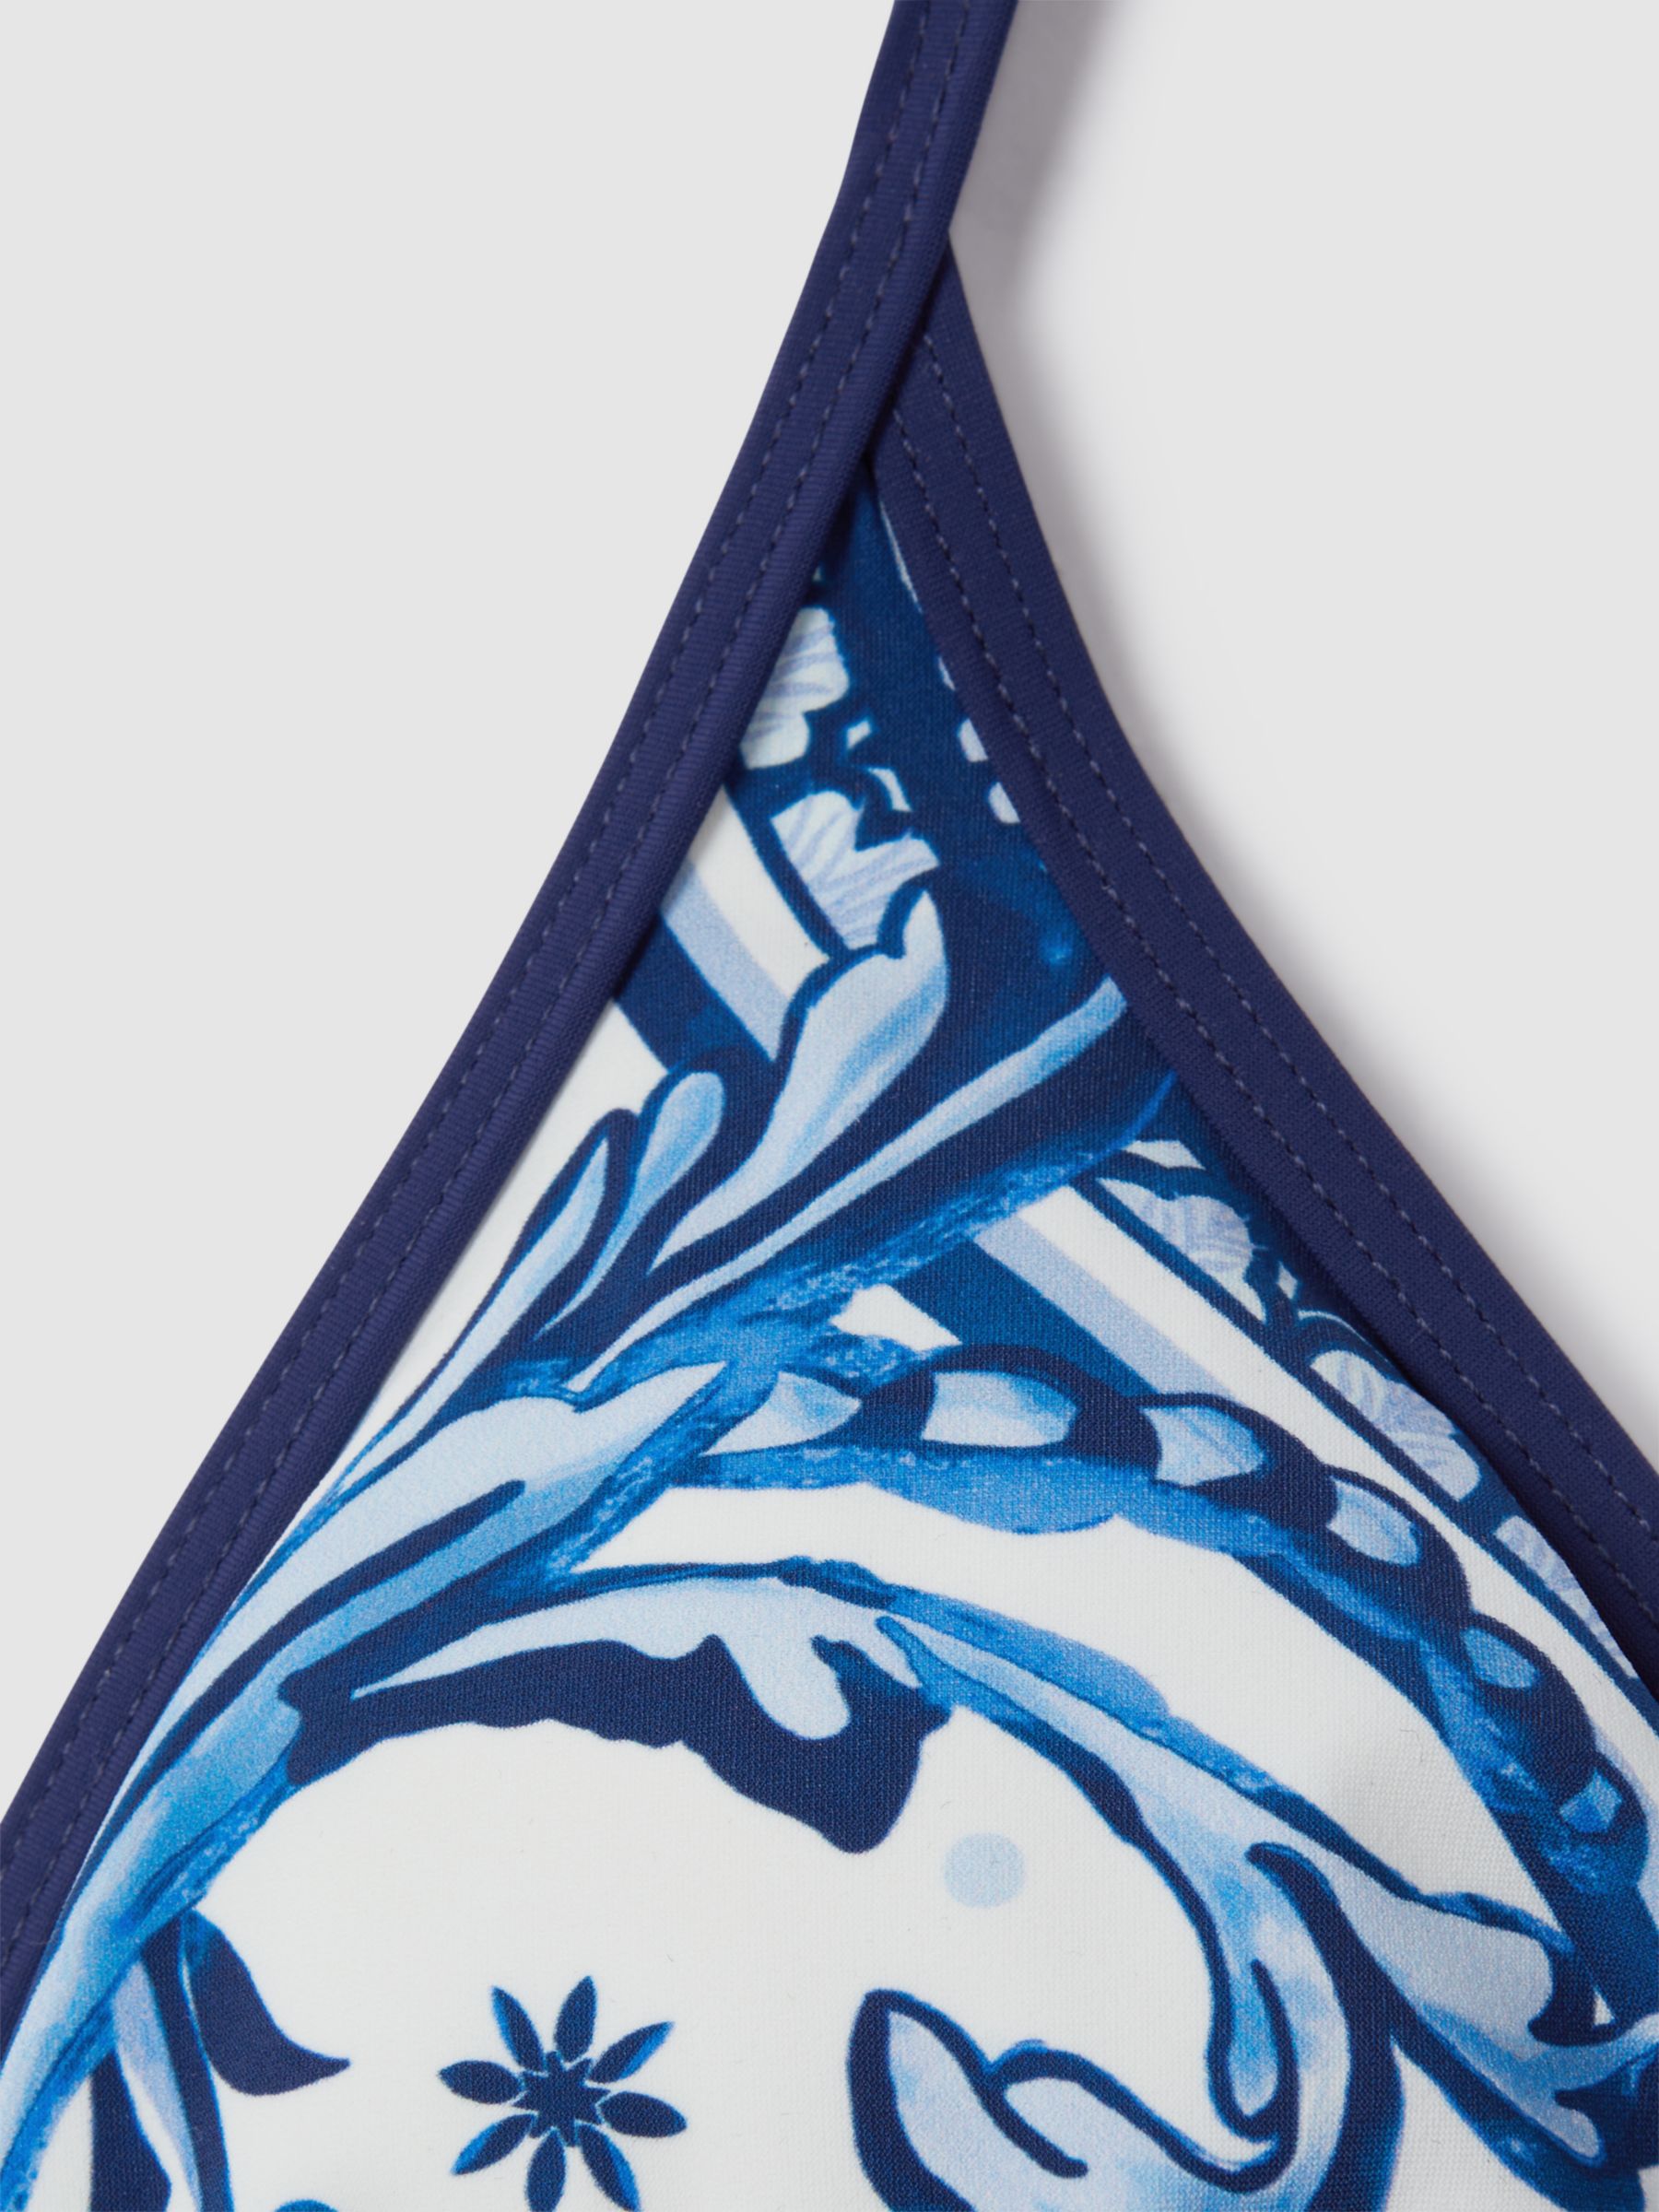 Reiss Tina Abstract Fern Print Triangle Bikini Top, White/Blue, 6